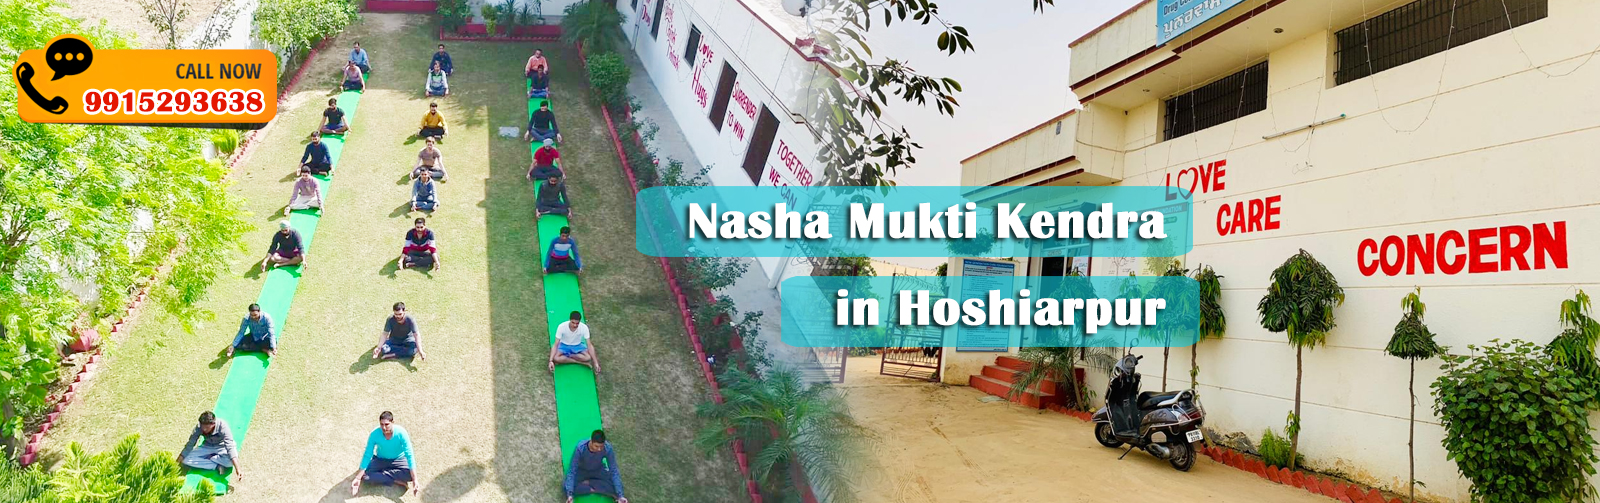 Nasha Mukti Kendra in Hoshiarpur